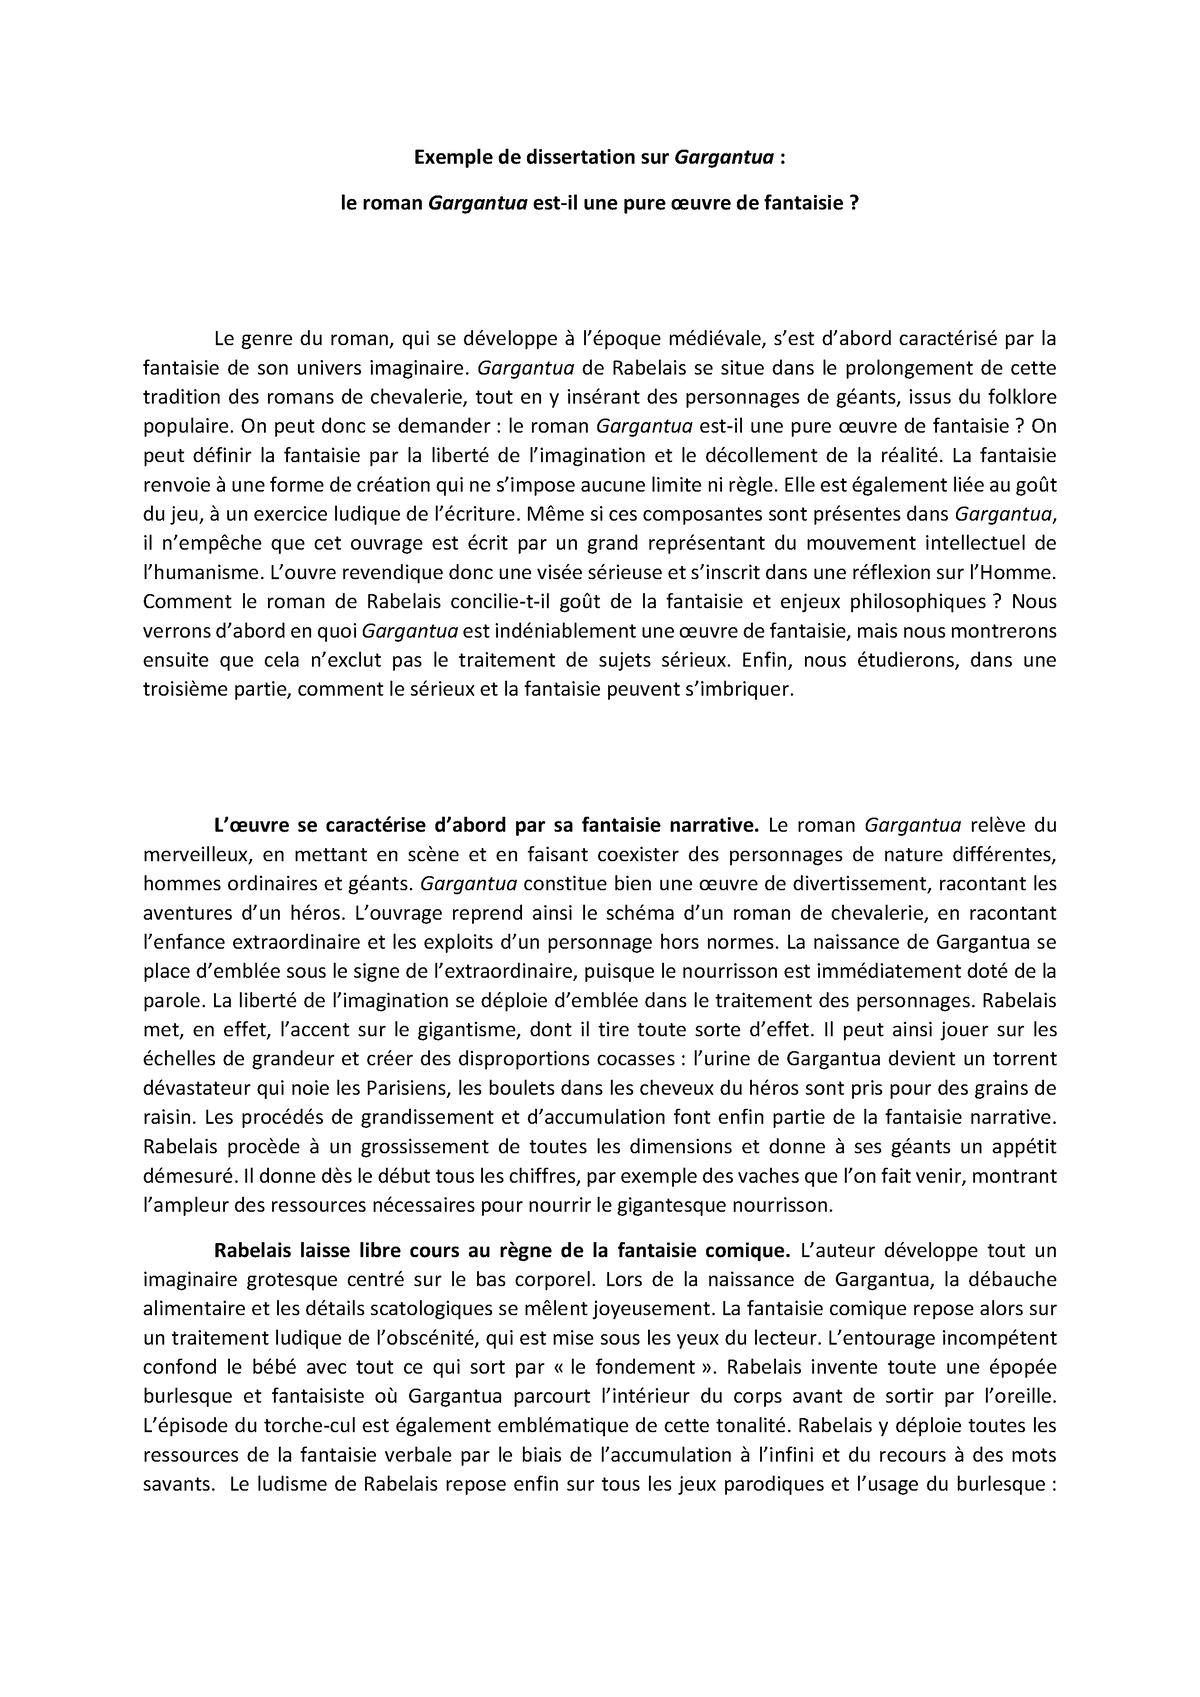 dissertation sur gargantua pdf